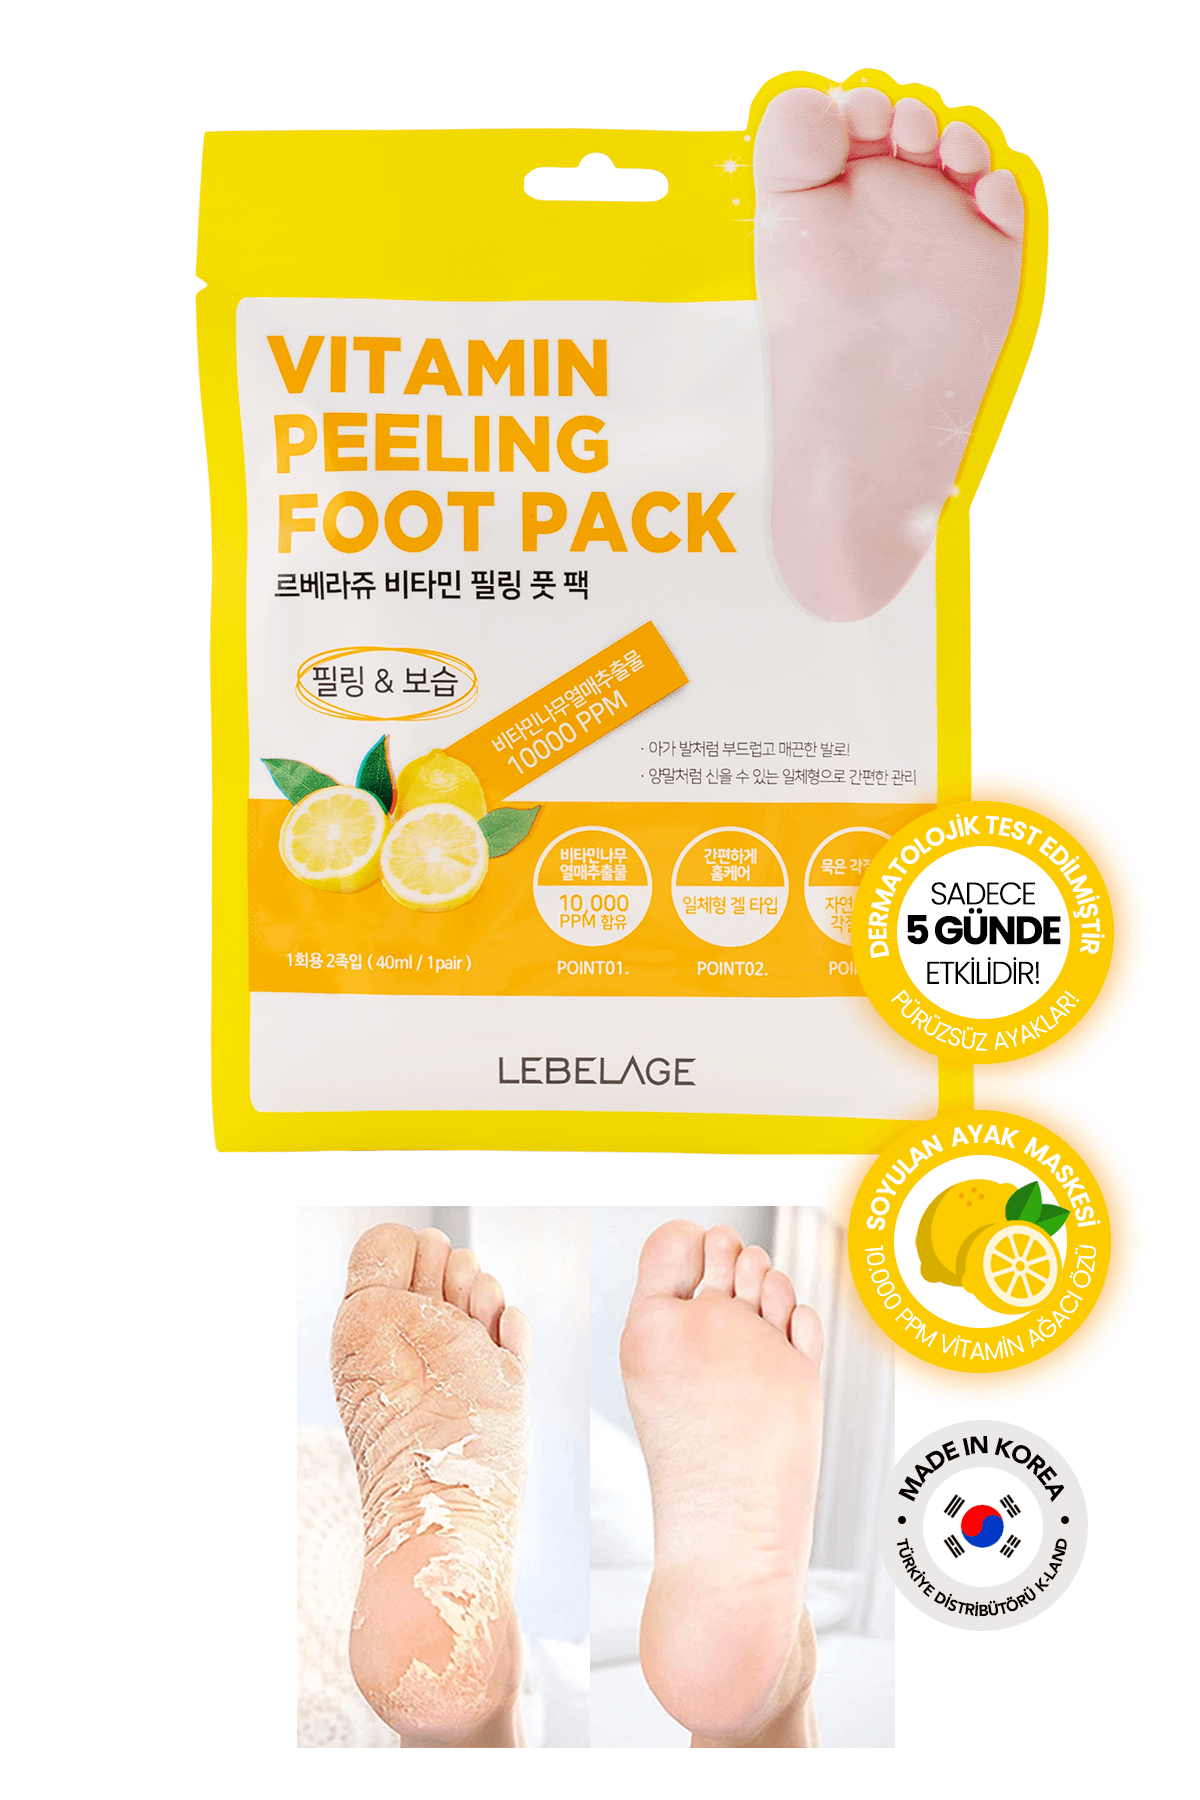 Soyulan Ayak Maskesi Vitamin Kompleksi Kore Soyucu Maske Lebelage Vitamin Peeling Foot Pack